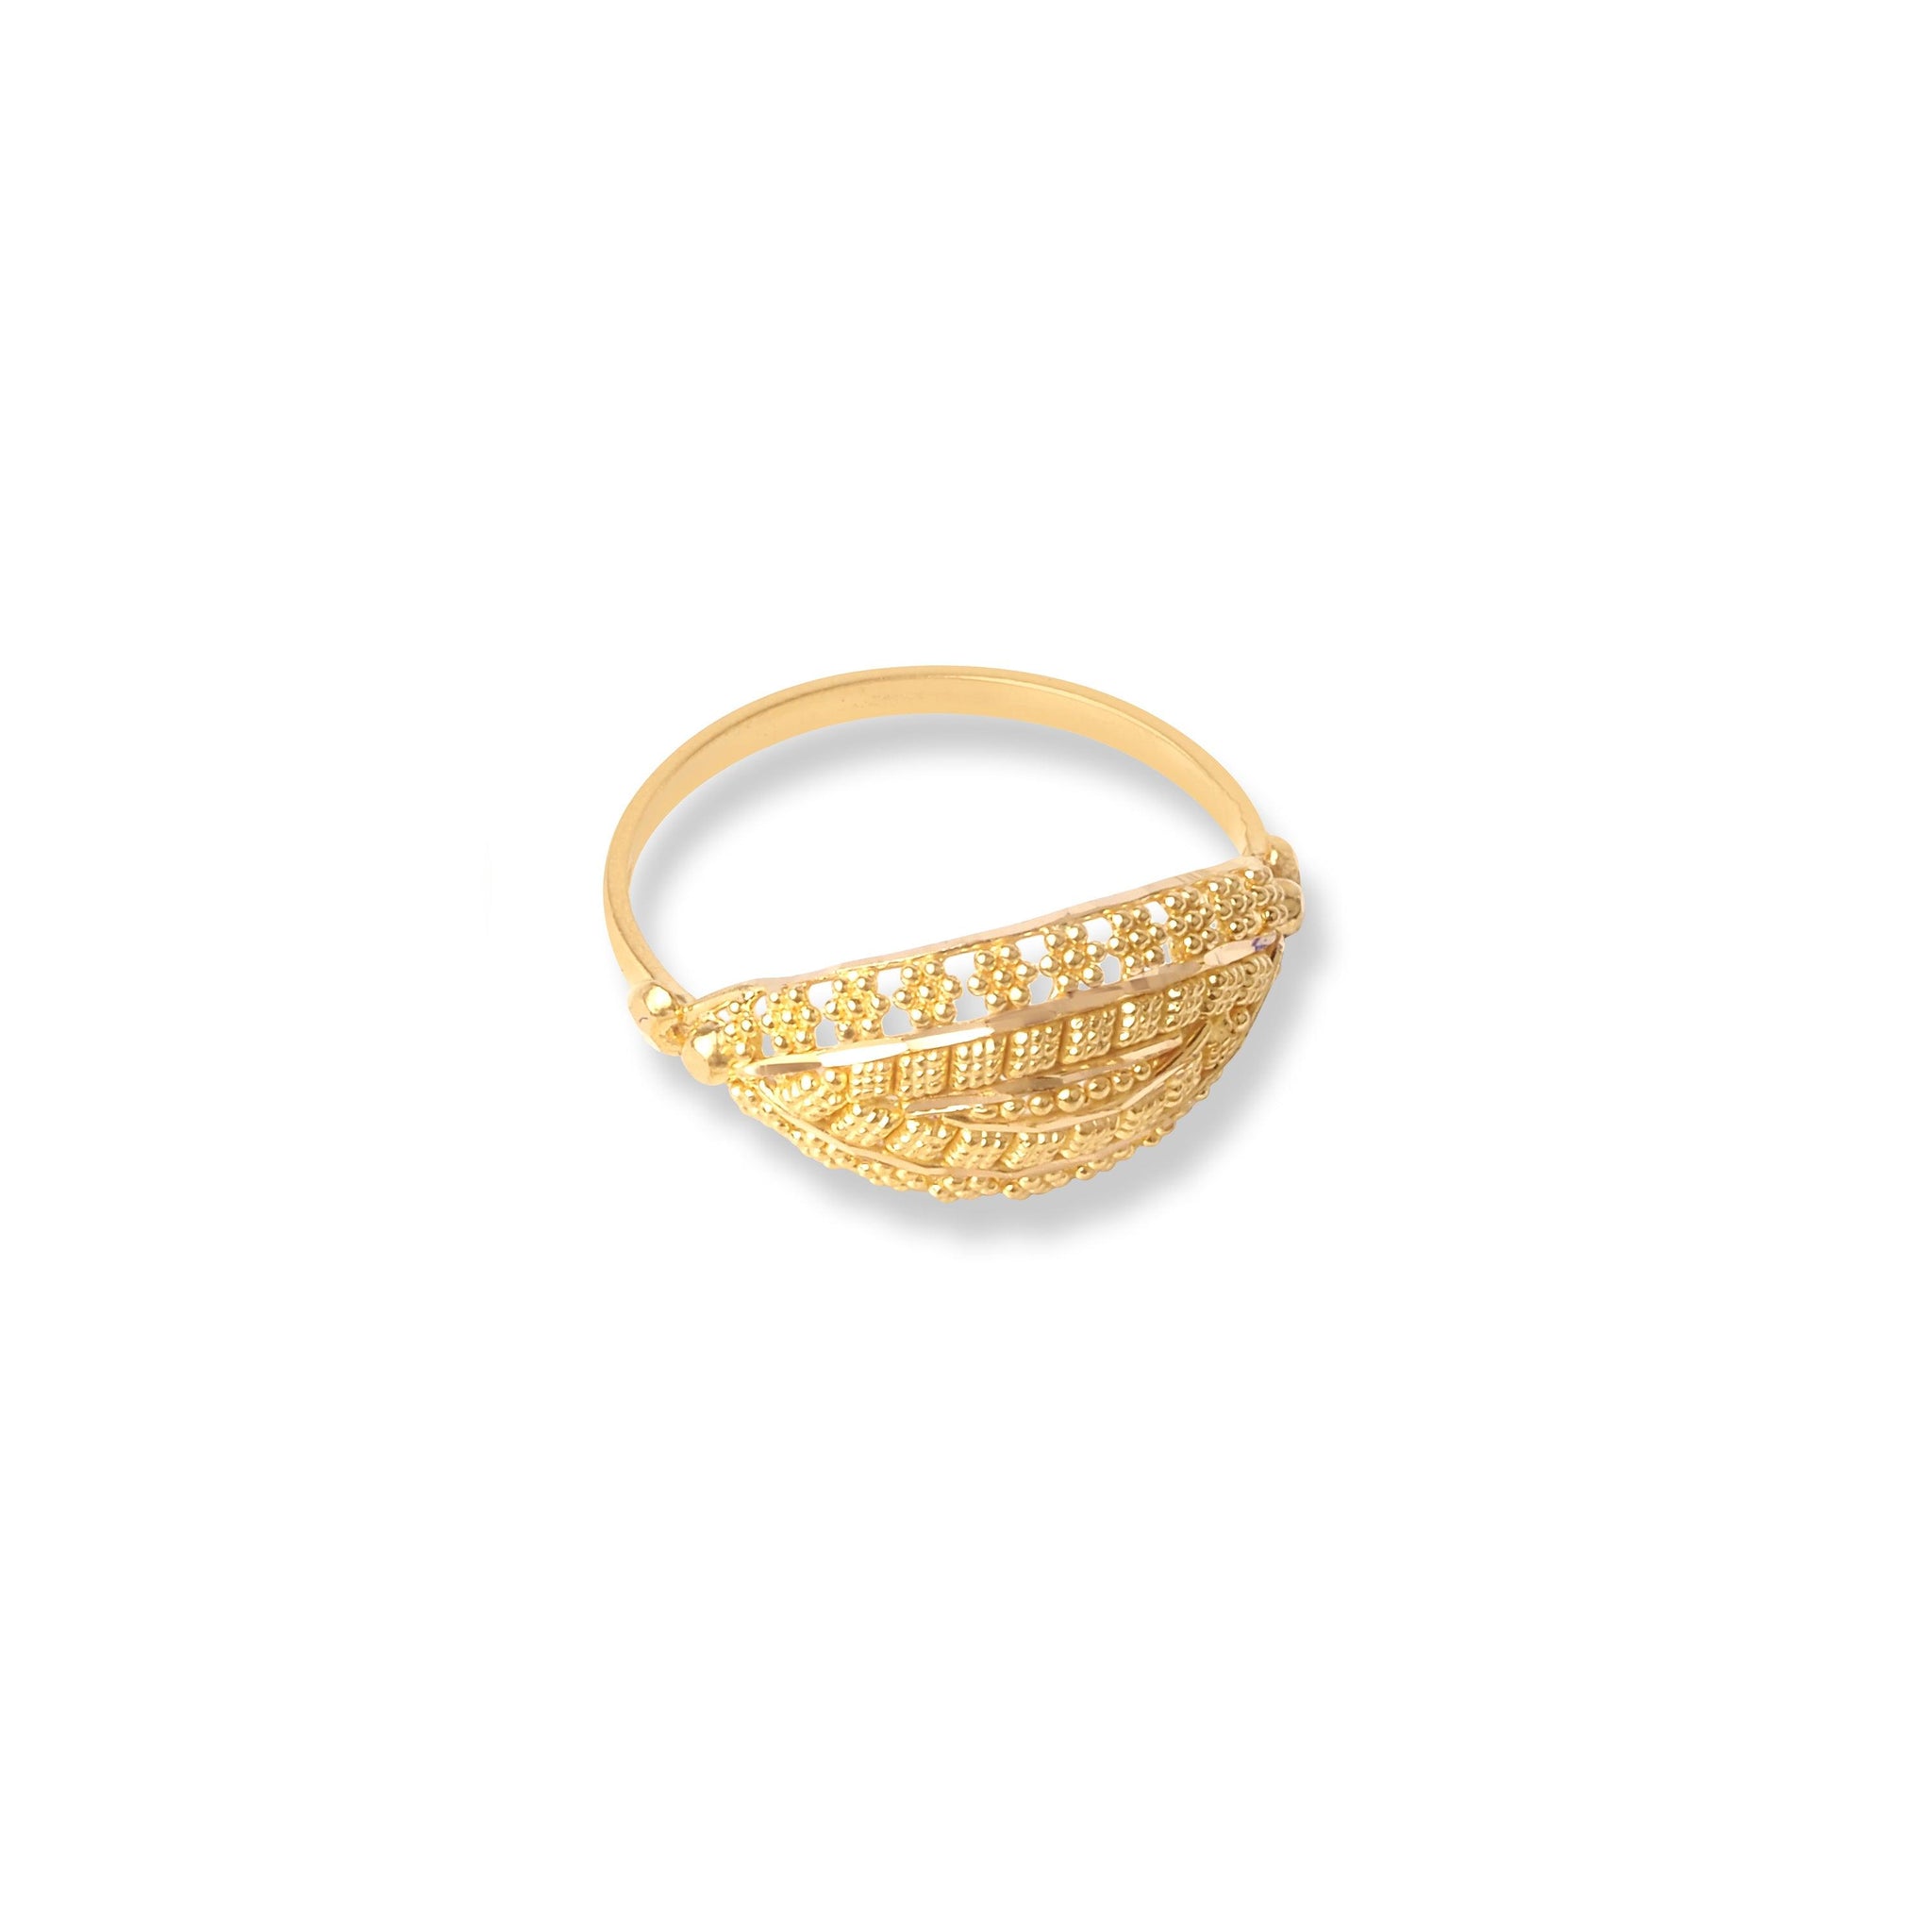 22ct Gold Filigree Ring (3.5g) LR-6571